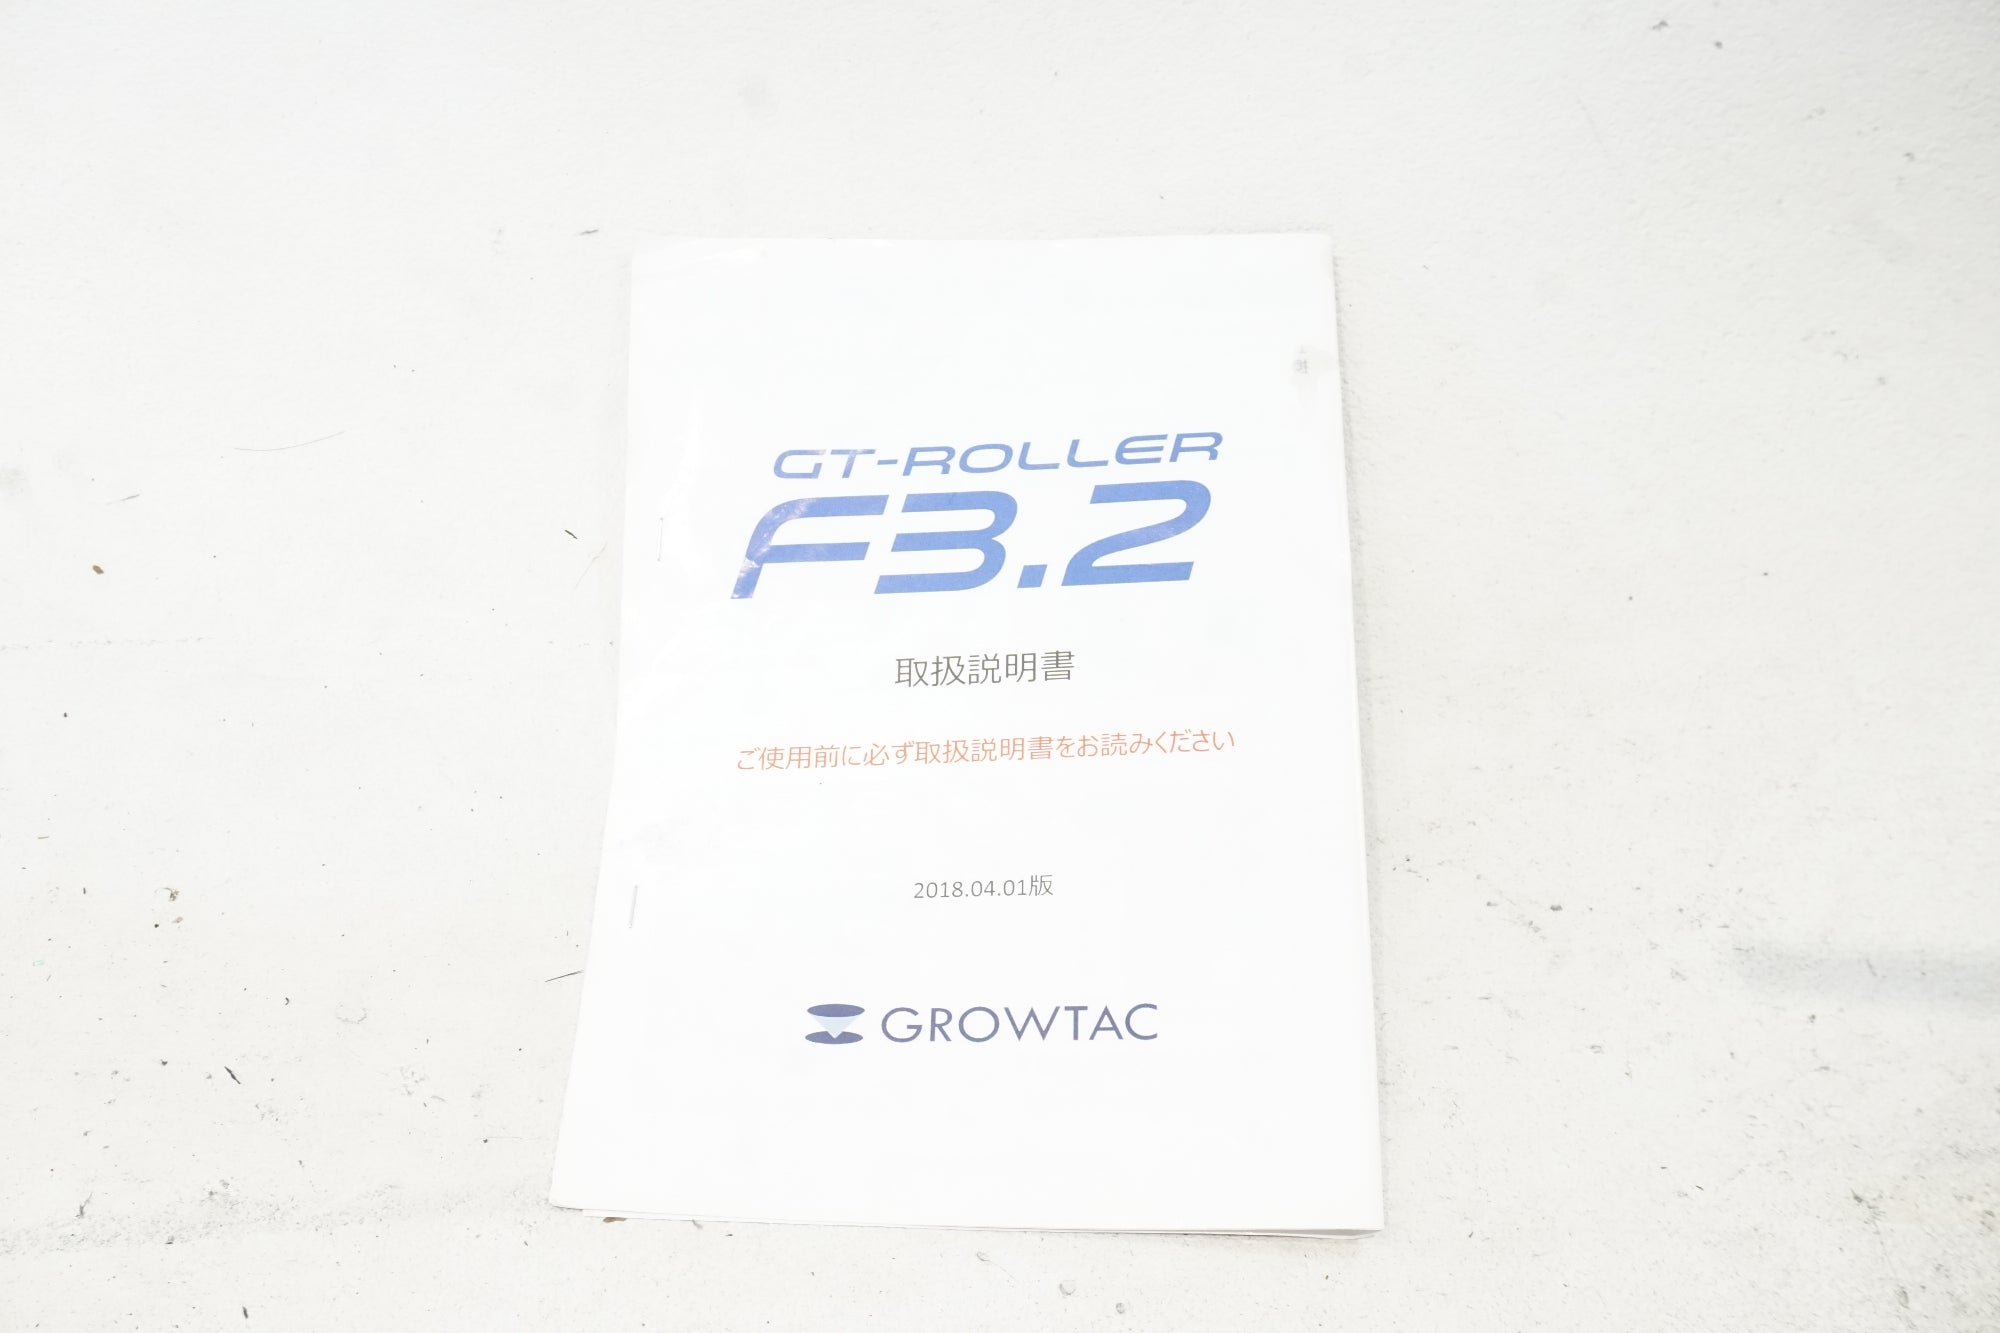 GROWTEC 「グロータック」 GT-ROLLER F3.2 サイクルトレーナー / 横浜戸塚店